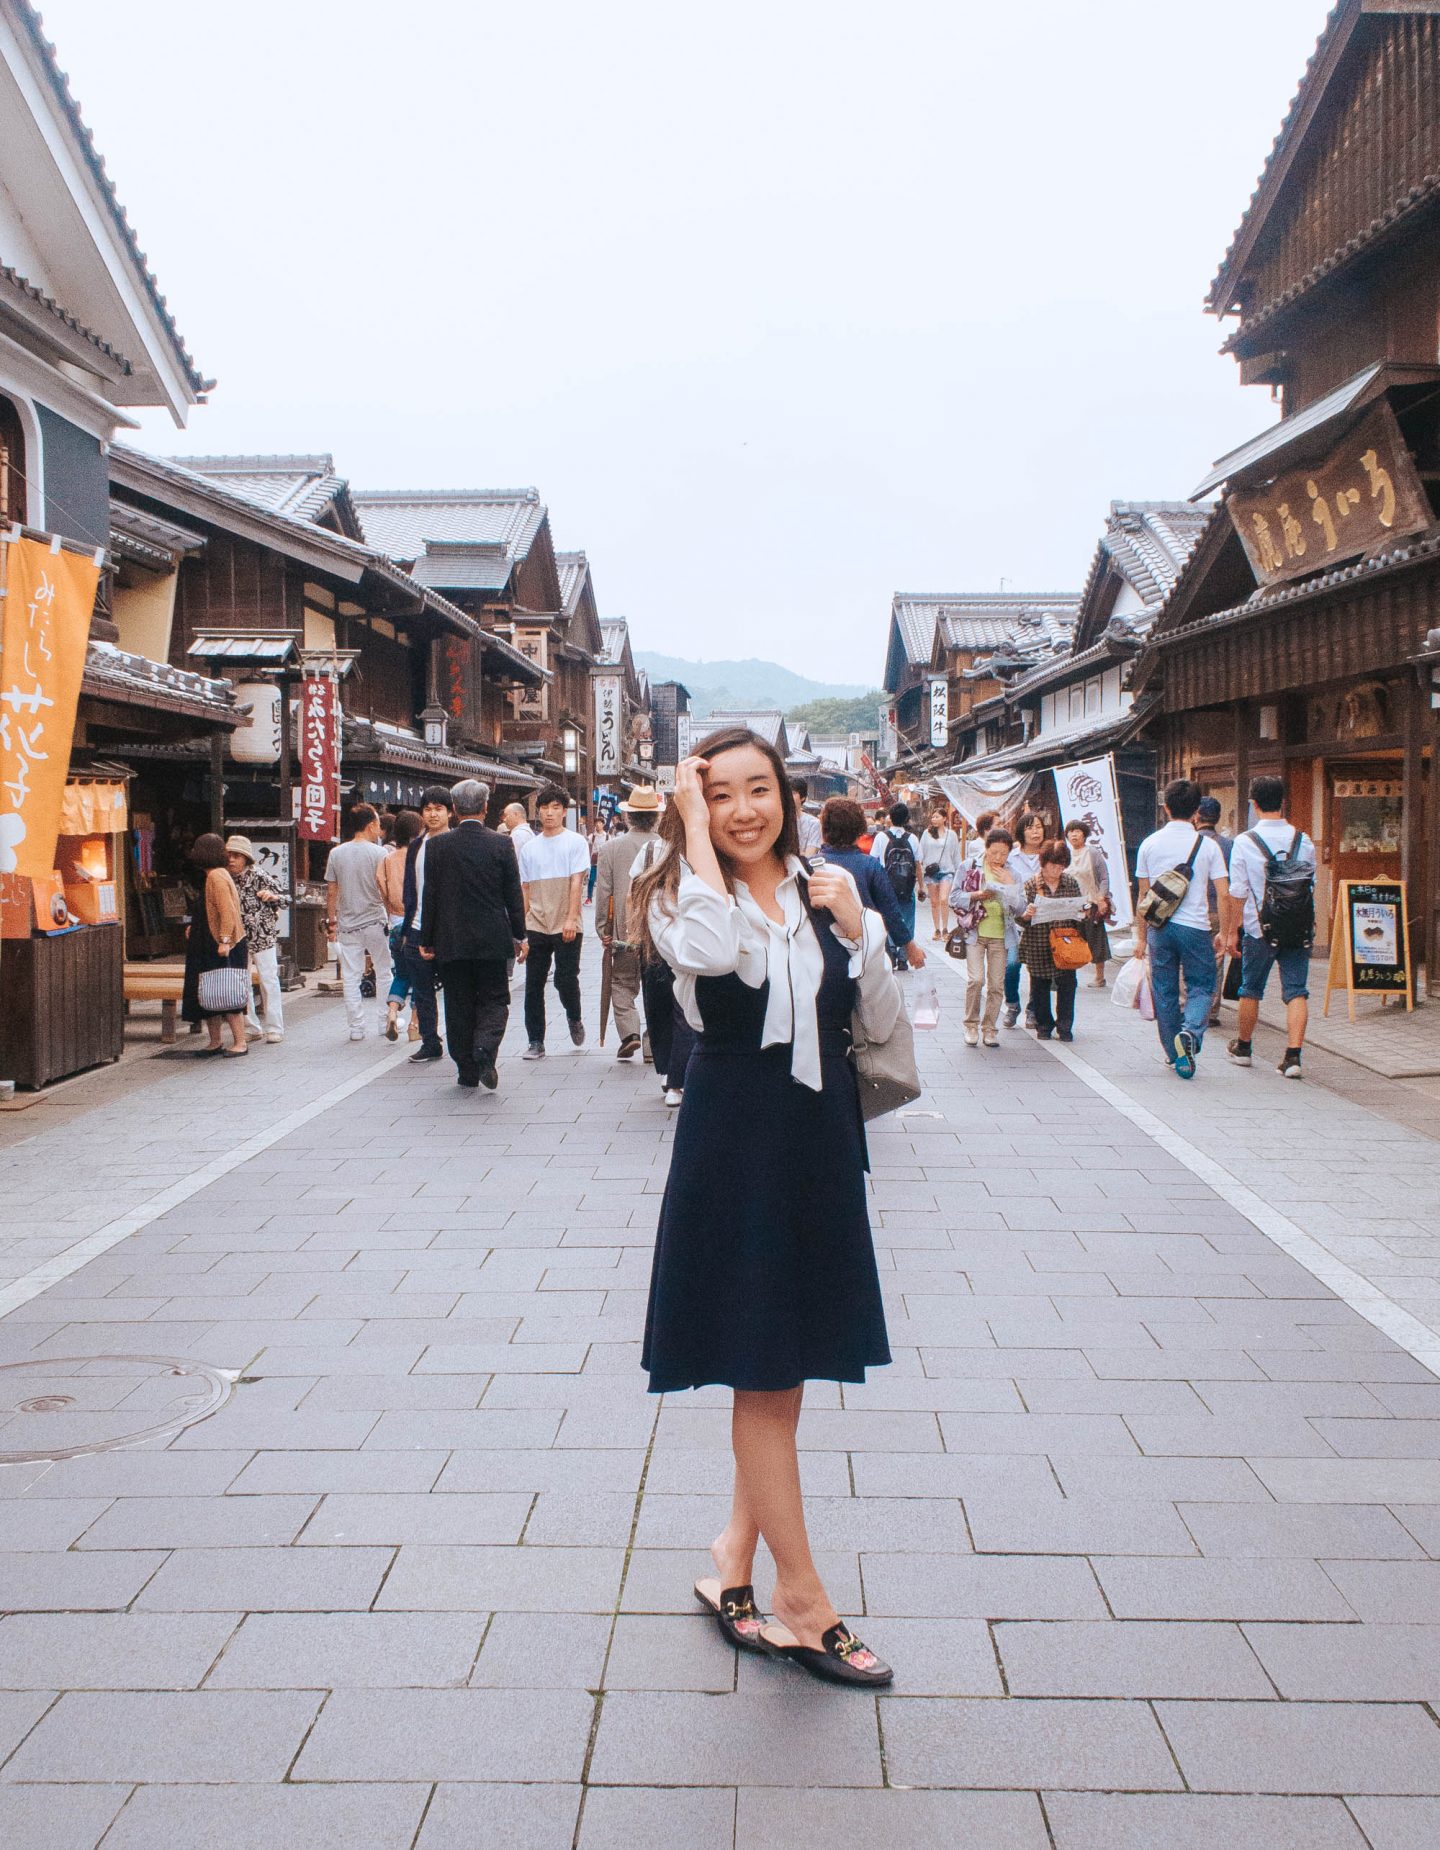 Exploring the Ise- Jingu Grand Shrine in Mie central japan 